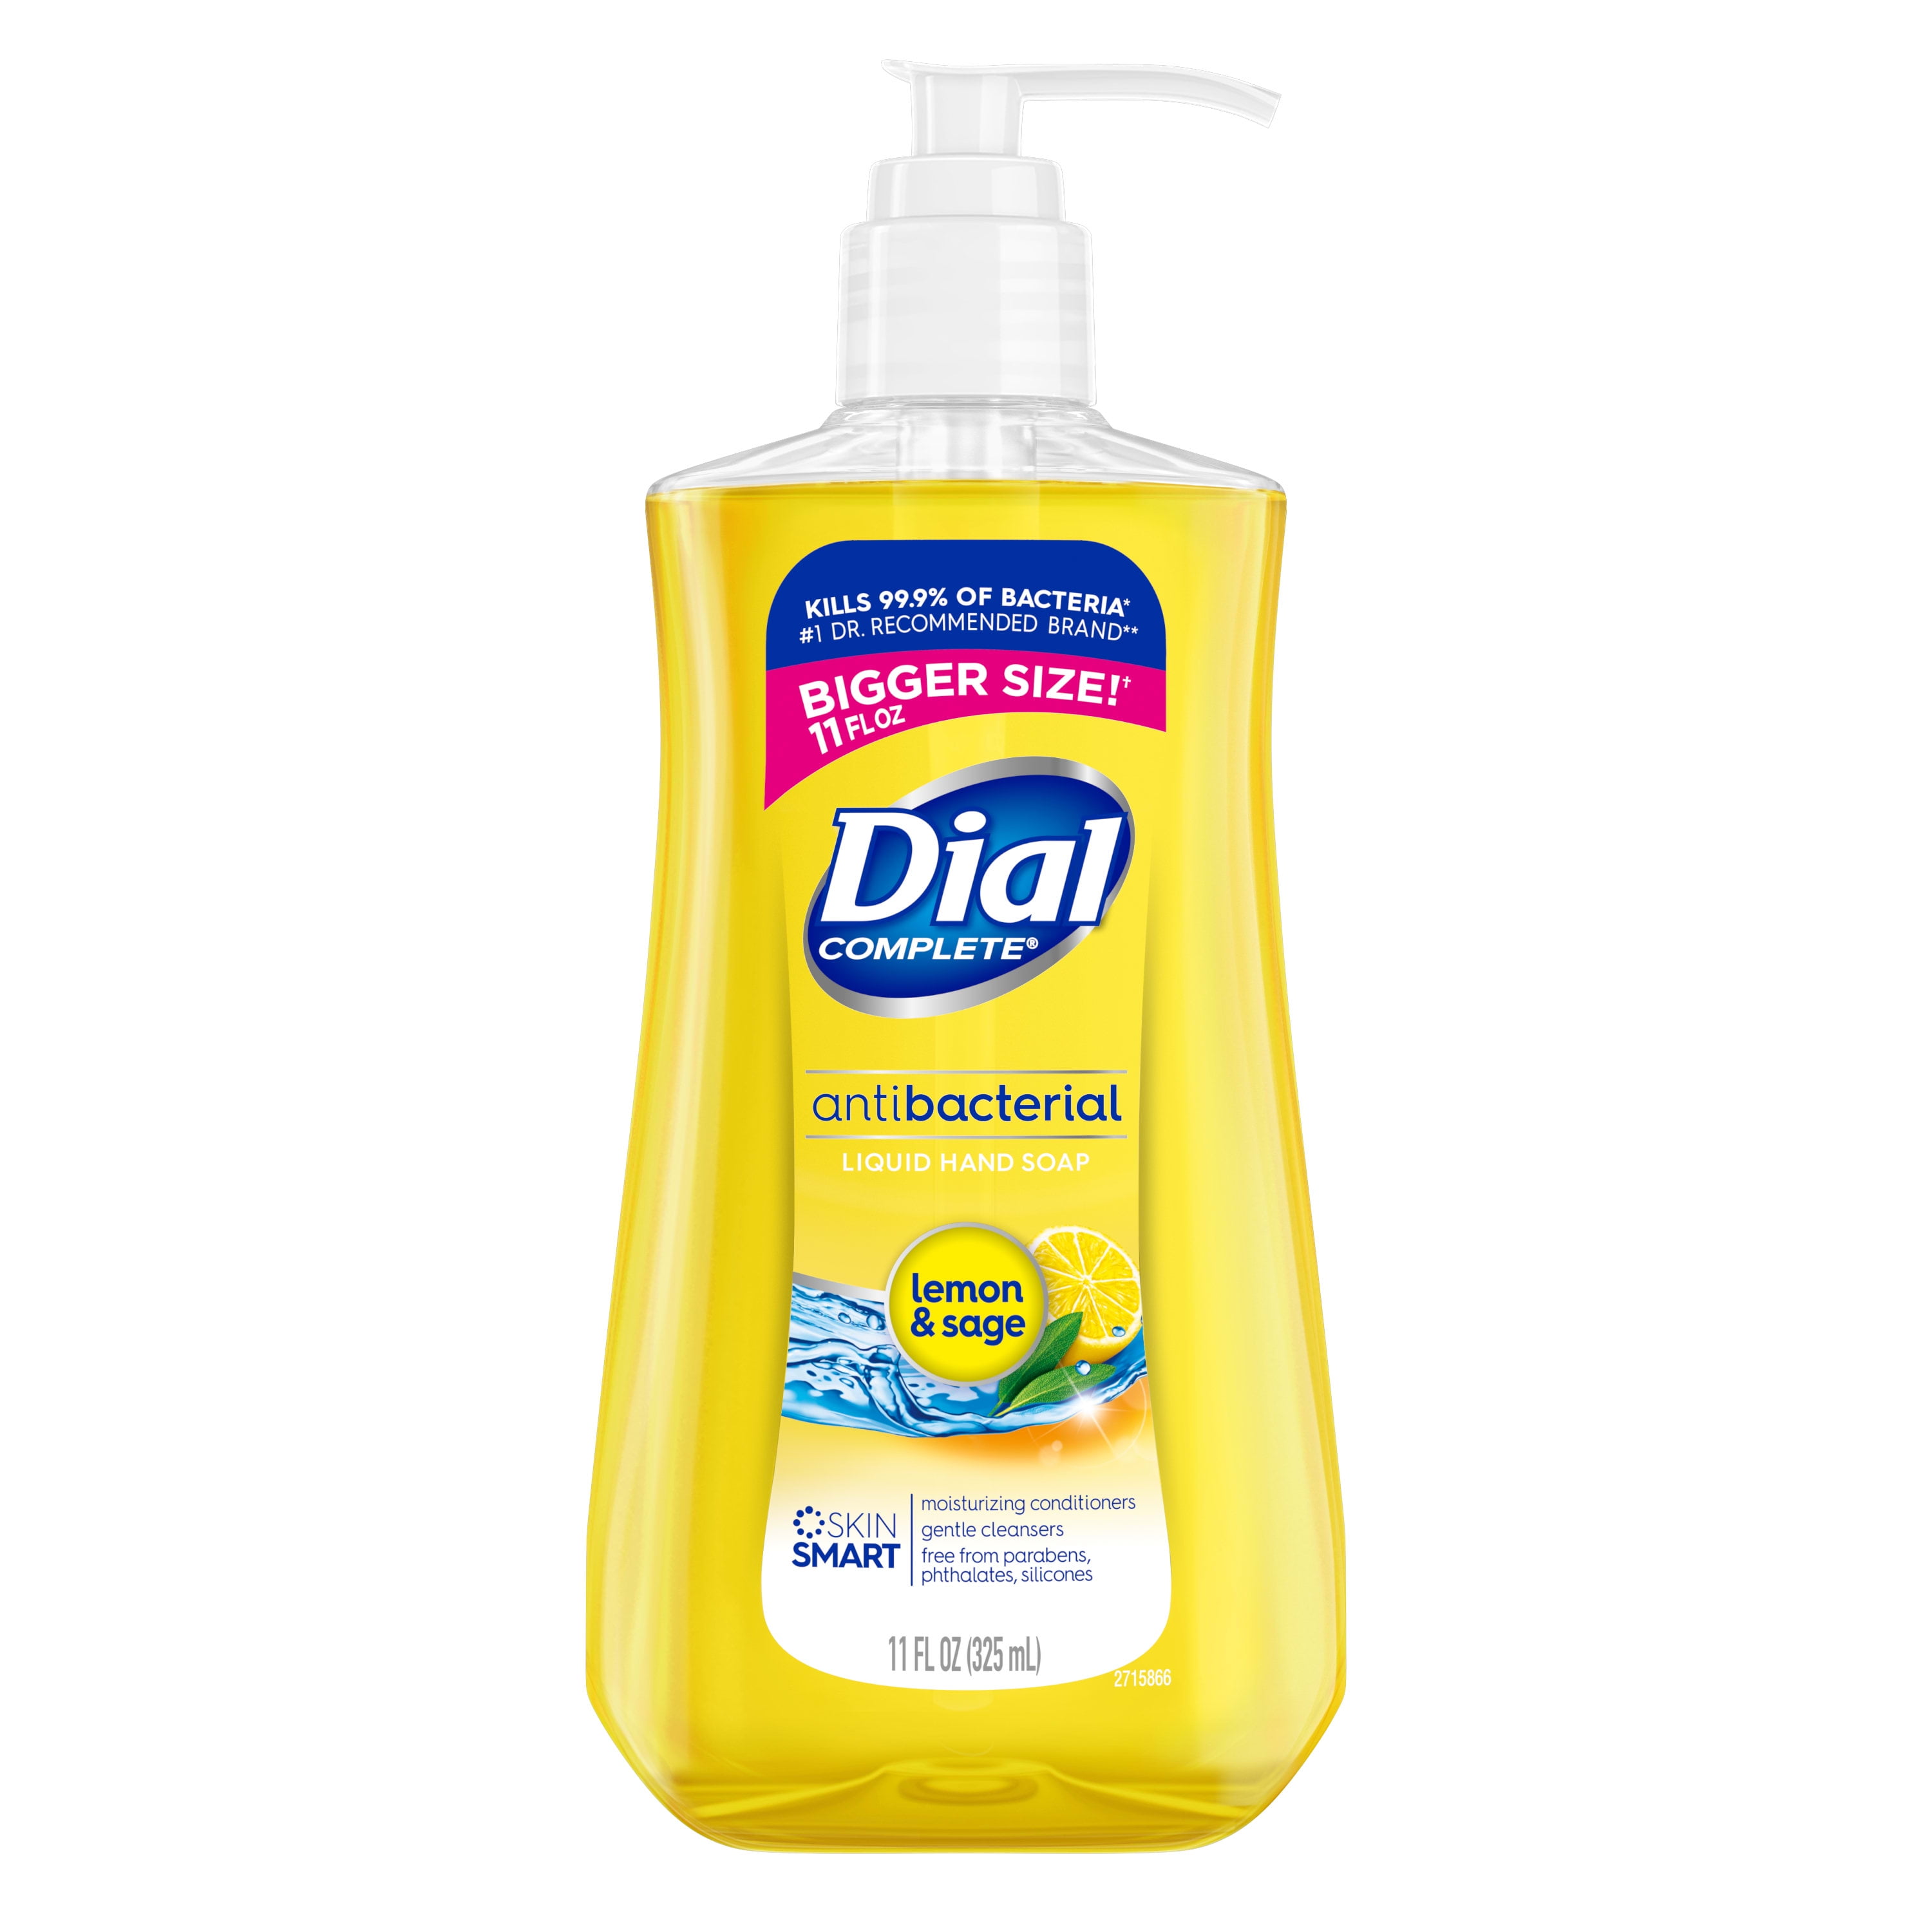 Dial Complete Antibacterial Liquid Hand Soap, Lemon & Sage, 11 fl oz